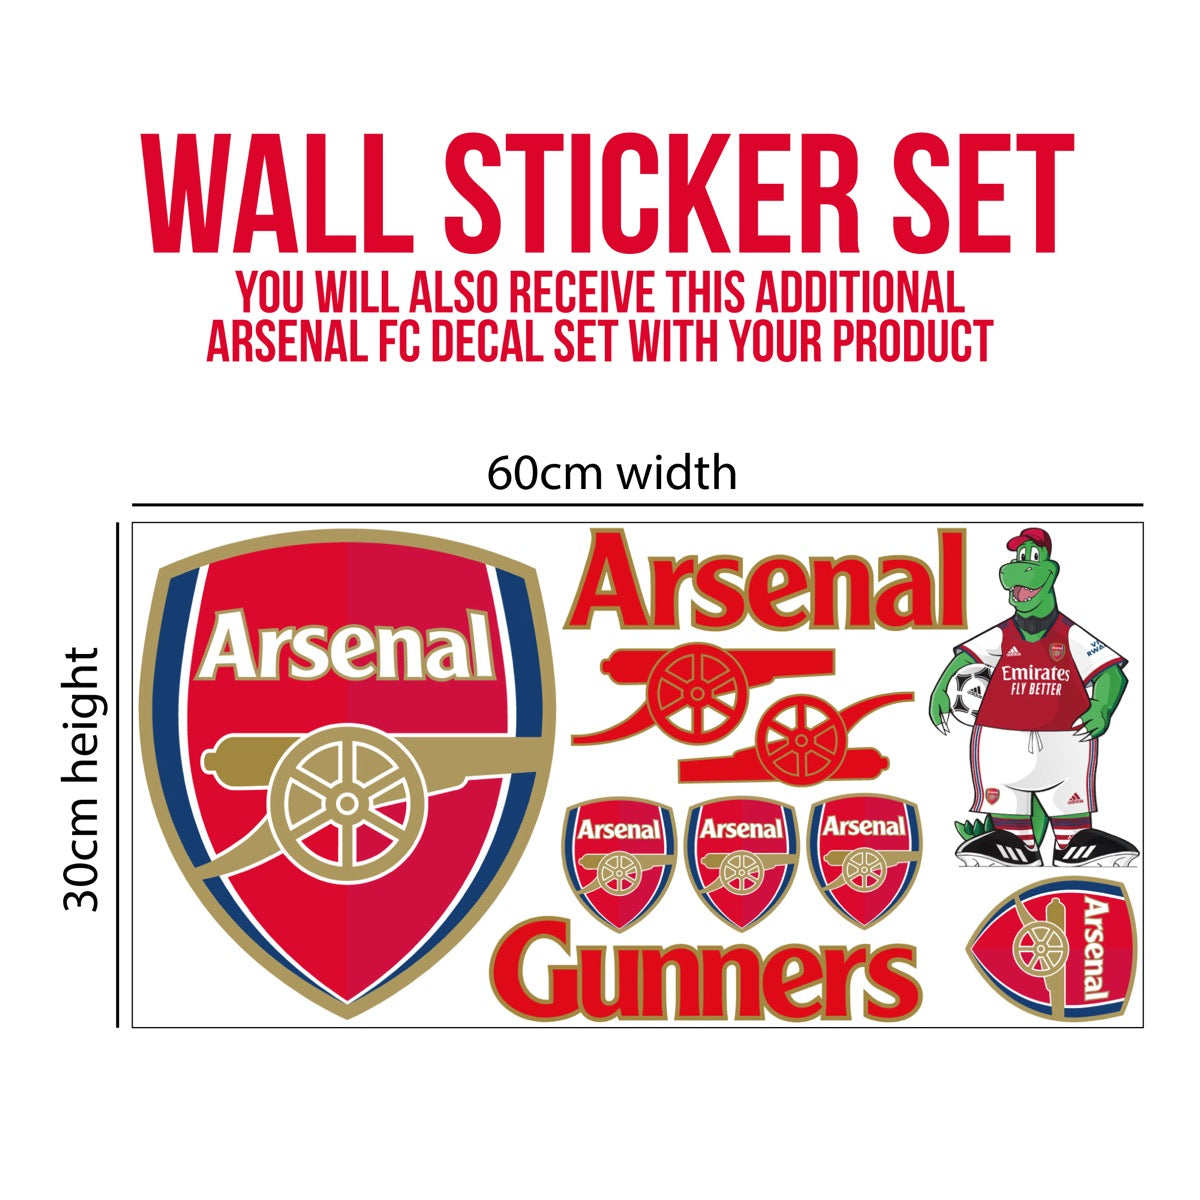 Arsenal Football Club - Smashed Emirates Stadium Outside View Mural + Gunners Wall Sticker Set